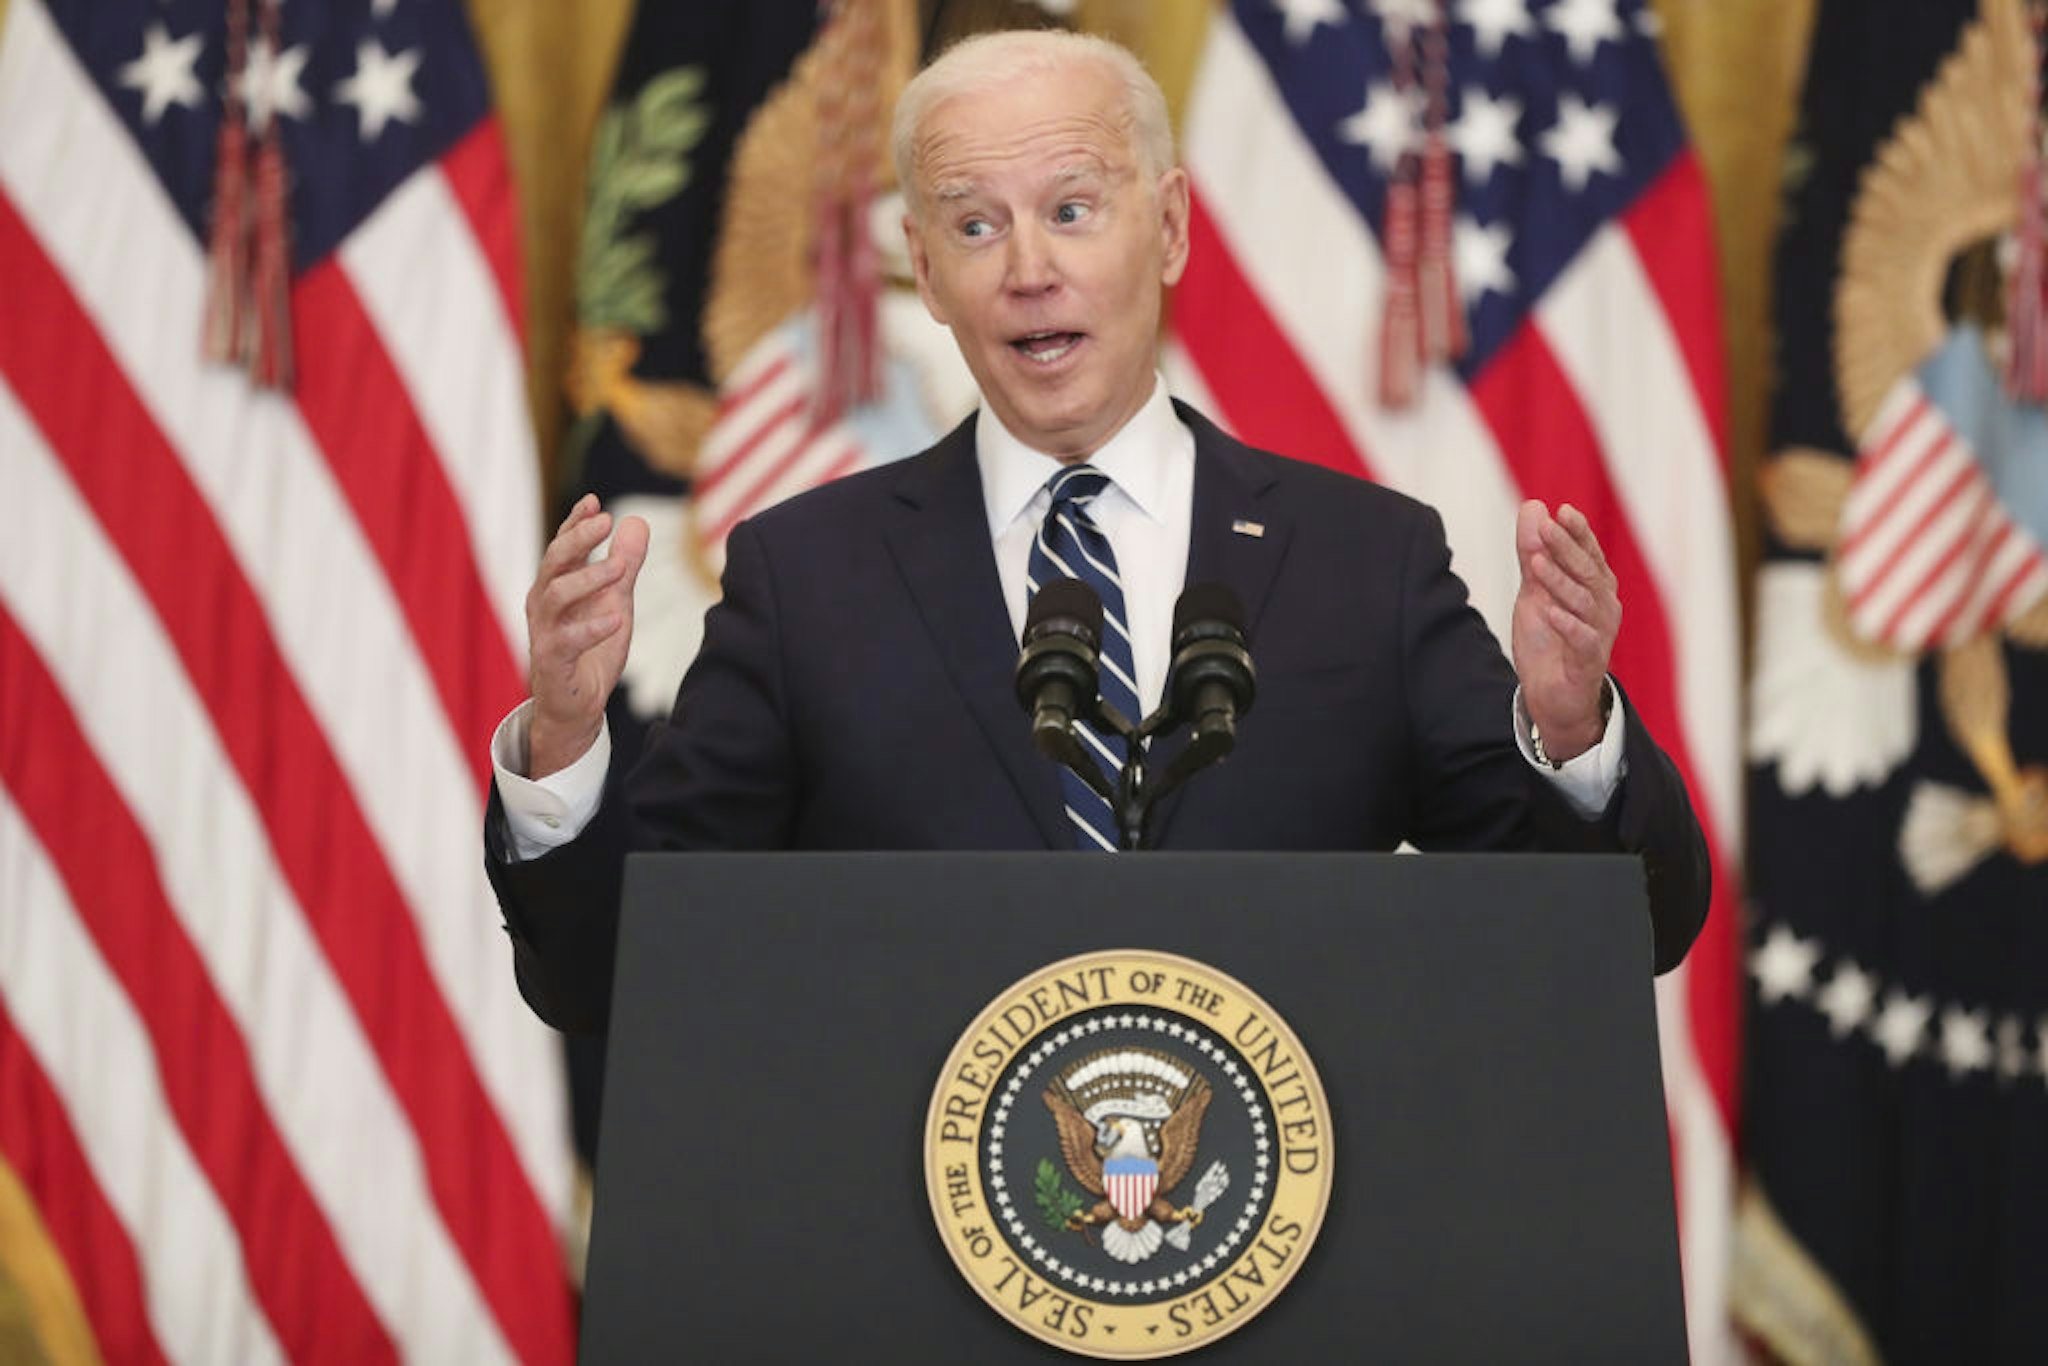 President Biden's News Conference Debut Puts Border, Guns, Covid In Focus